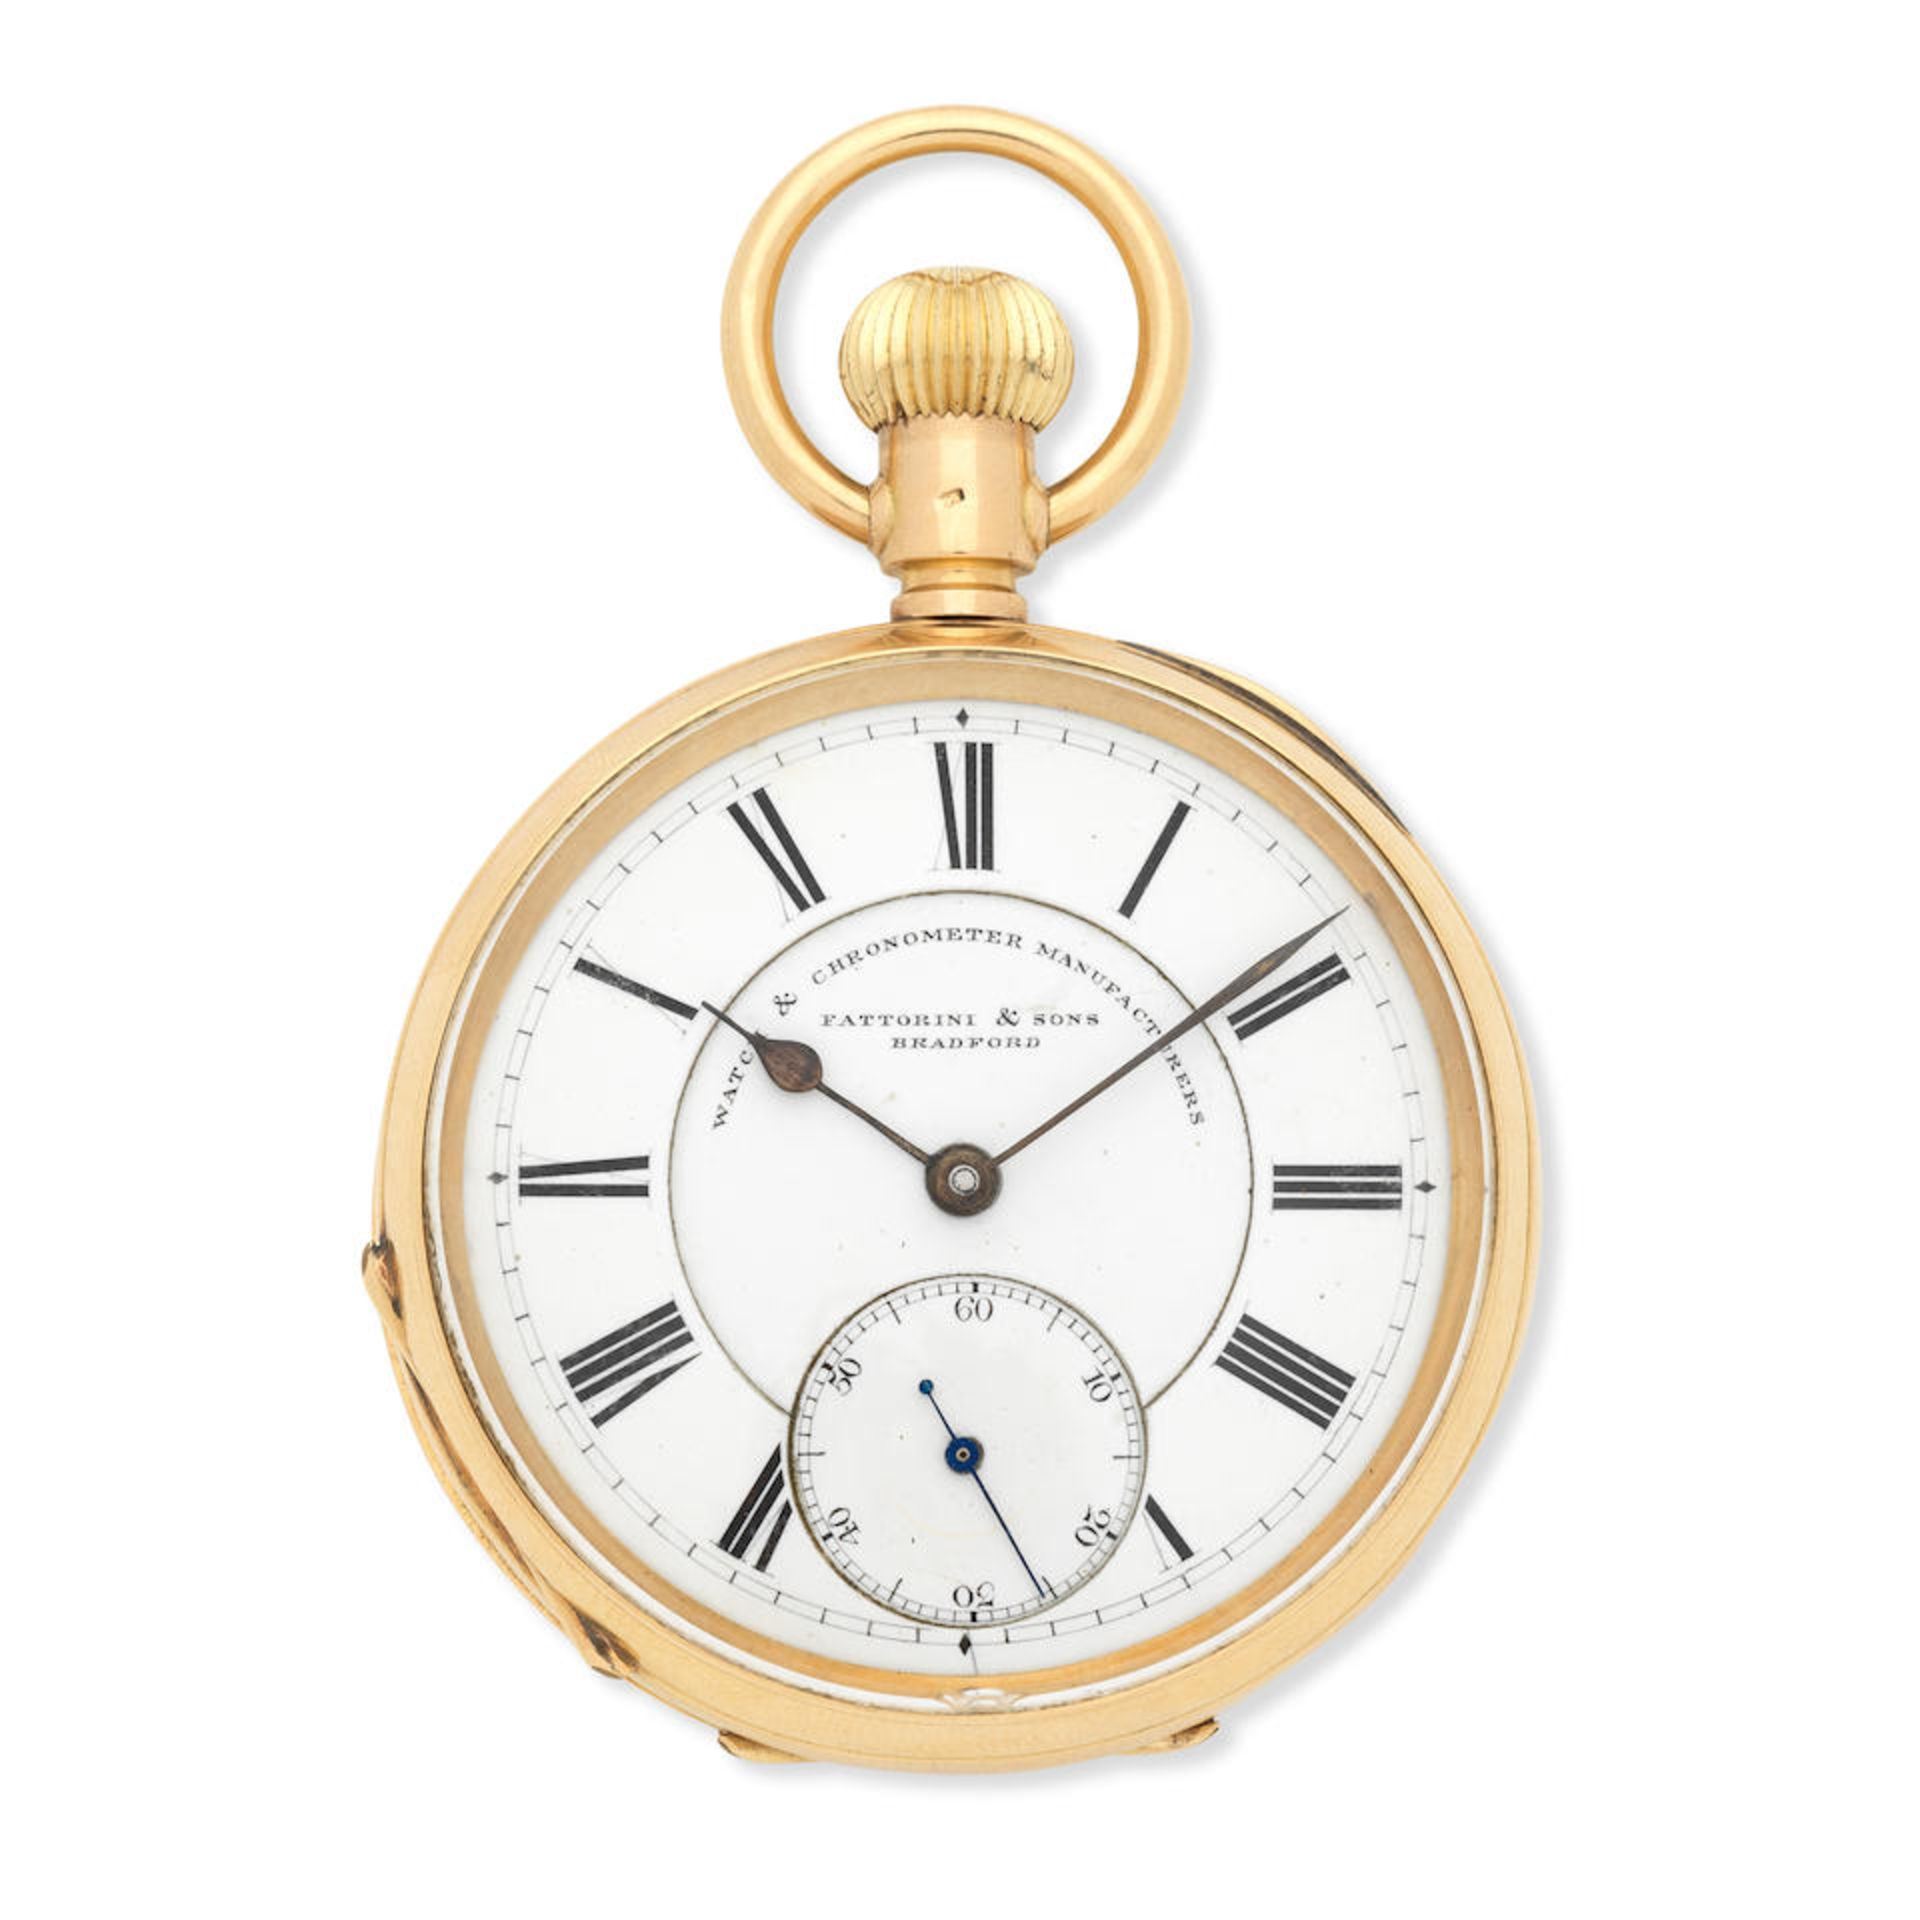 Waltham. An 18K gold keyless wind open face pocket watch retailed by Fattorini & Sons, Bradford ...